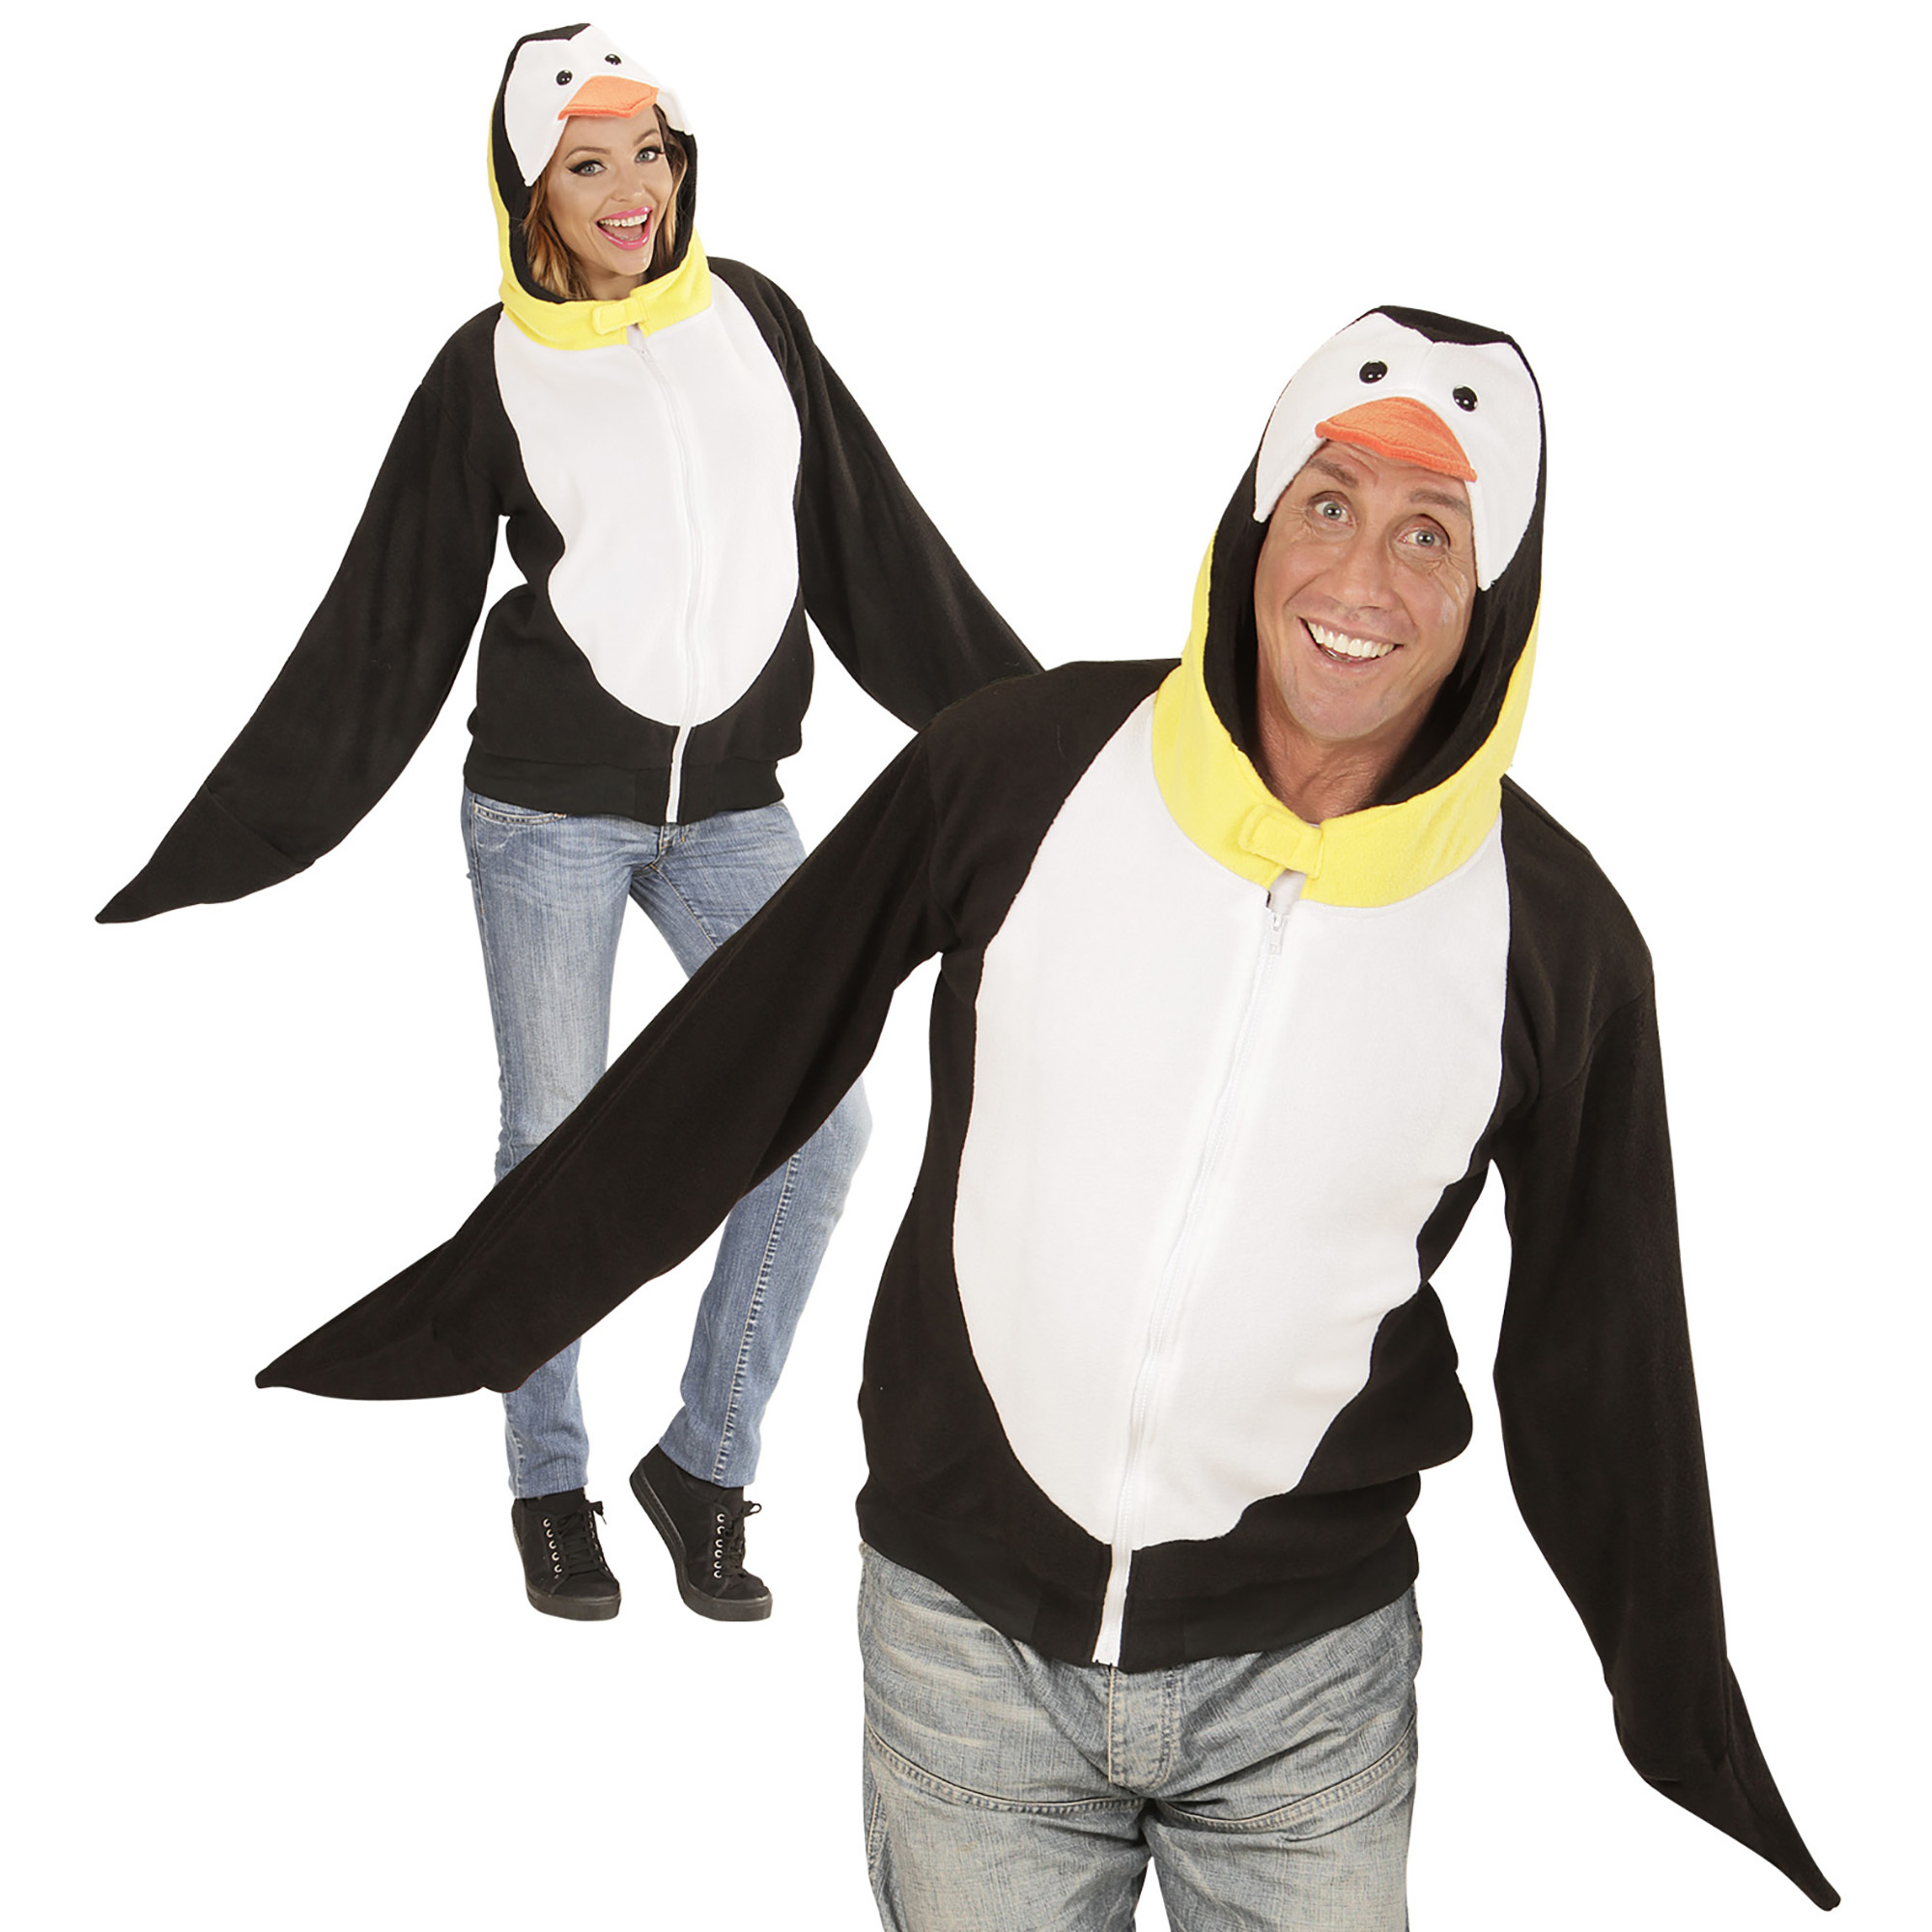 Pinguin vest hoodie volwassen outfit